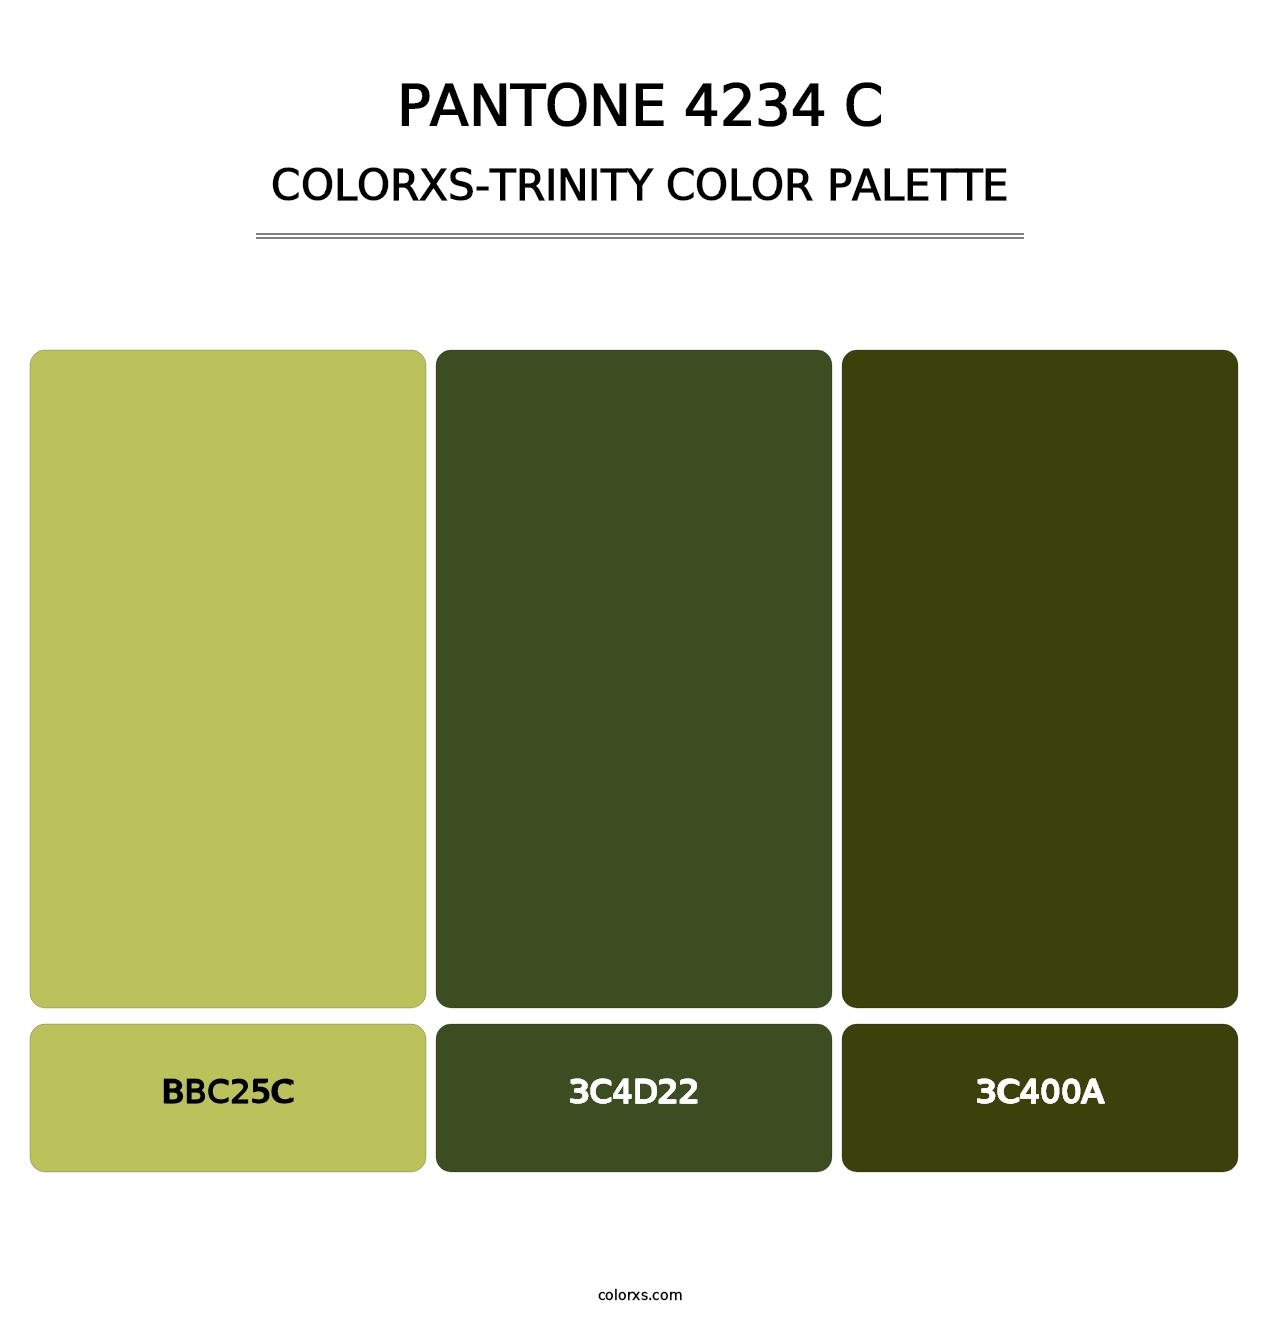 PANTONE 4234 C - Colorxs Trinity Palette